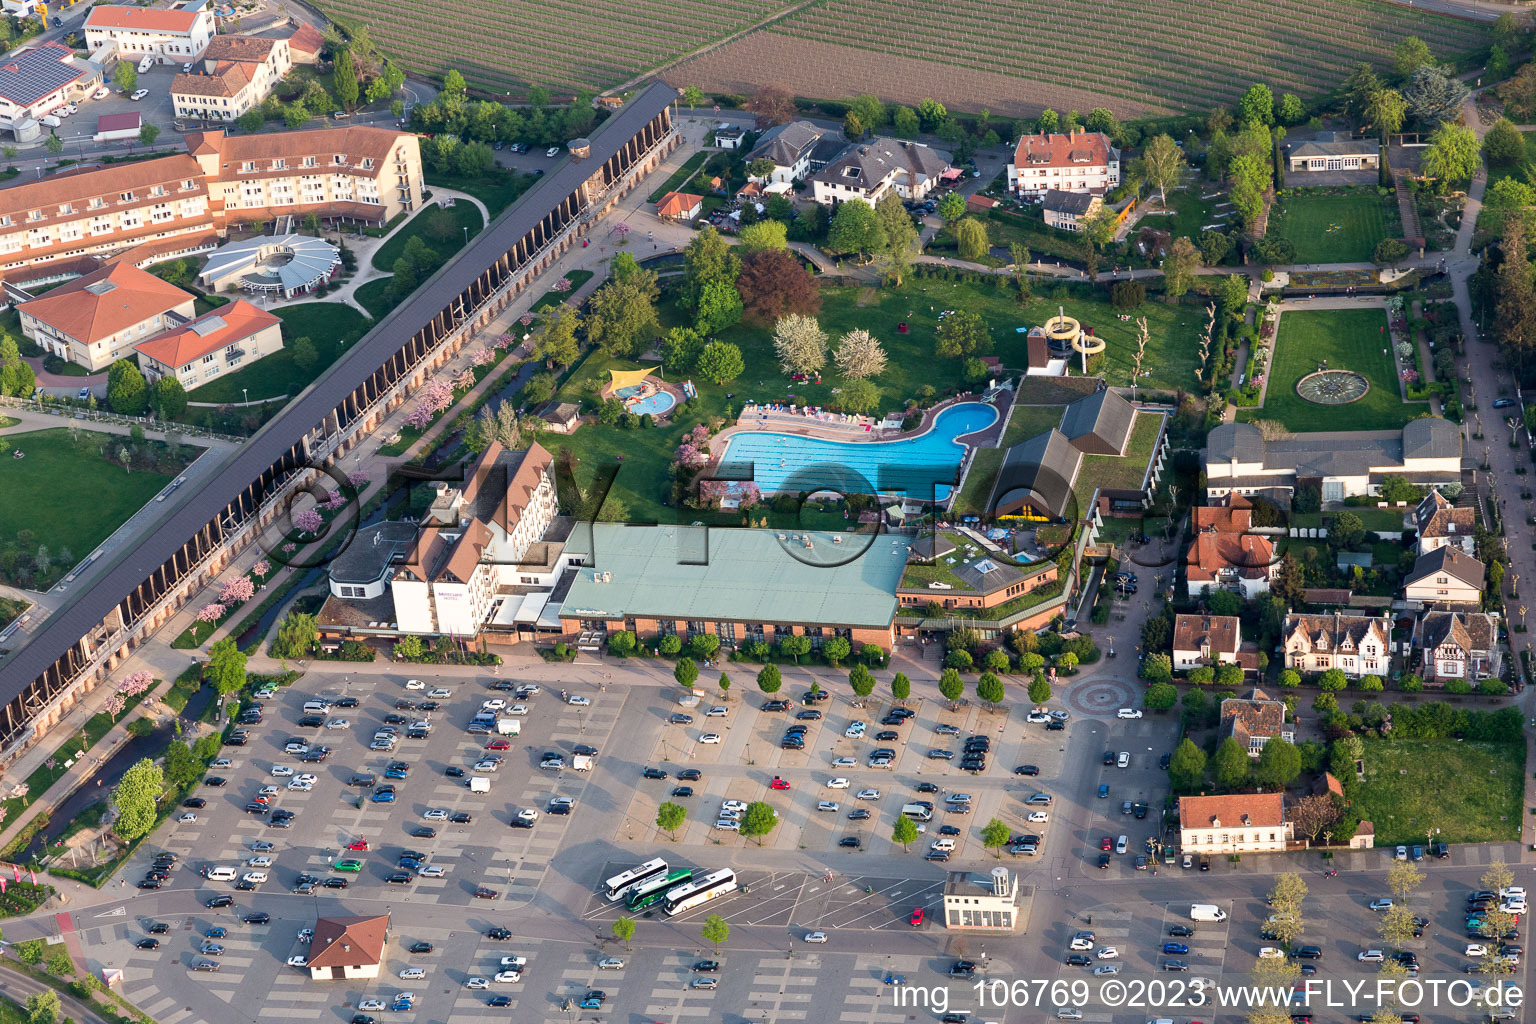 Aerial photograpy of Salinarium leisure pool at Wurstmarkt in Bad Dürkheim in the state Rhineland-Palatinate, Germany